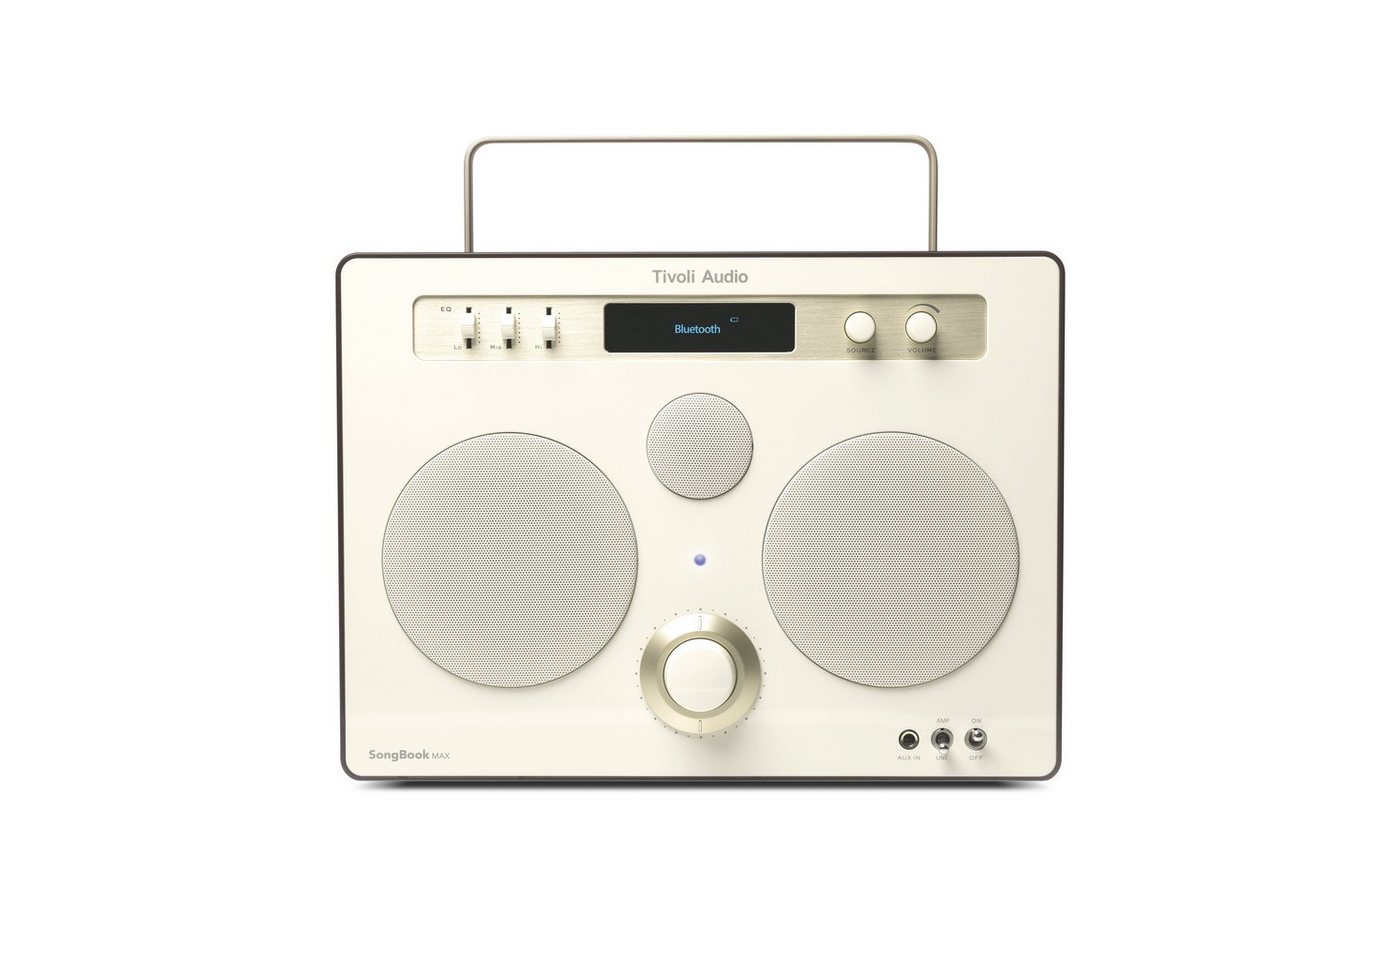 Tivoli Audio SongBook MAX Bluetooth-Lautsprecher (Bluetooth, analoger Equalizer, DAB+, tragbarer Lautsprecher, 10h Akku-Laufzeit) von Tivoli Audio